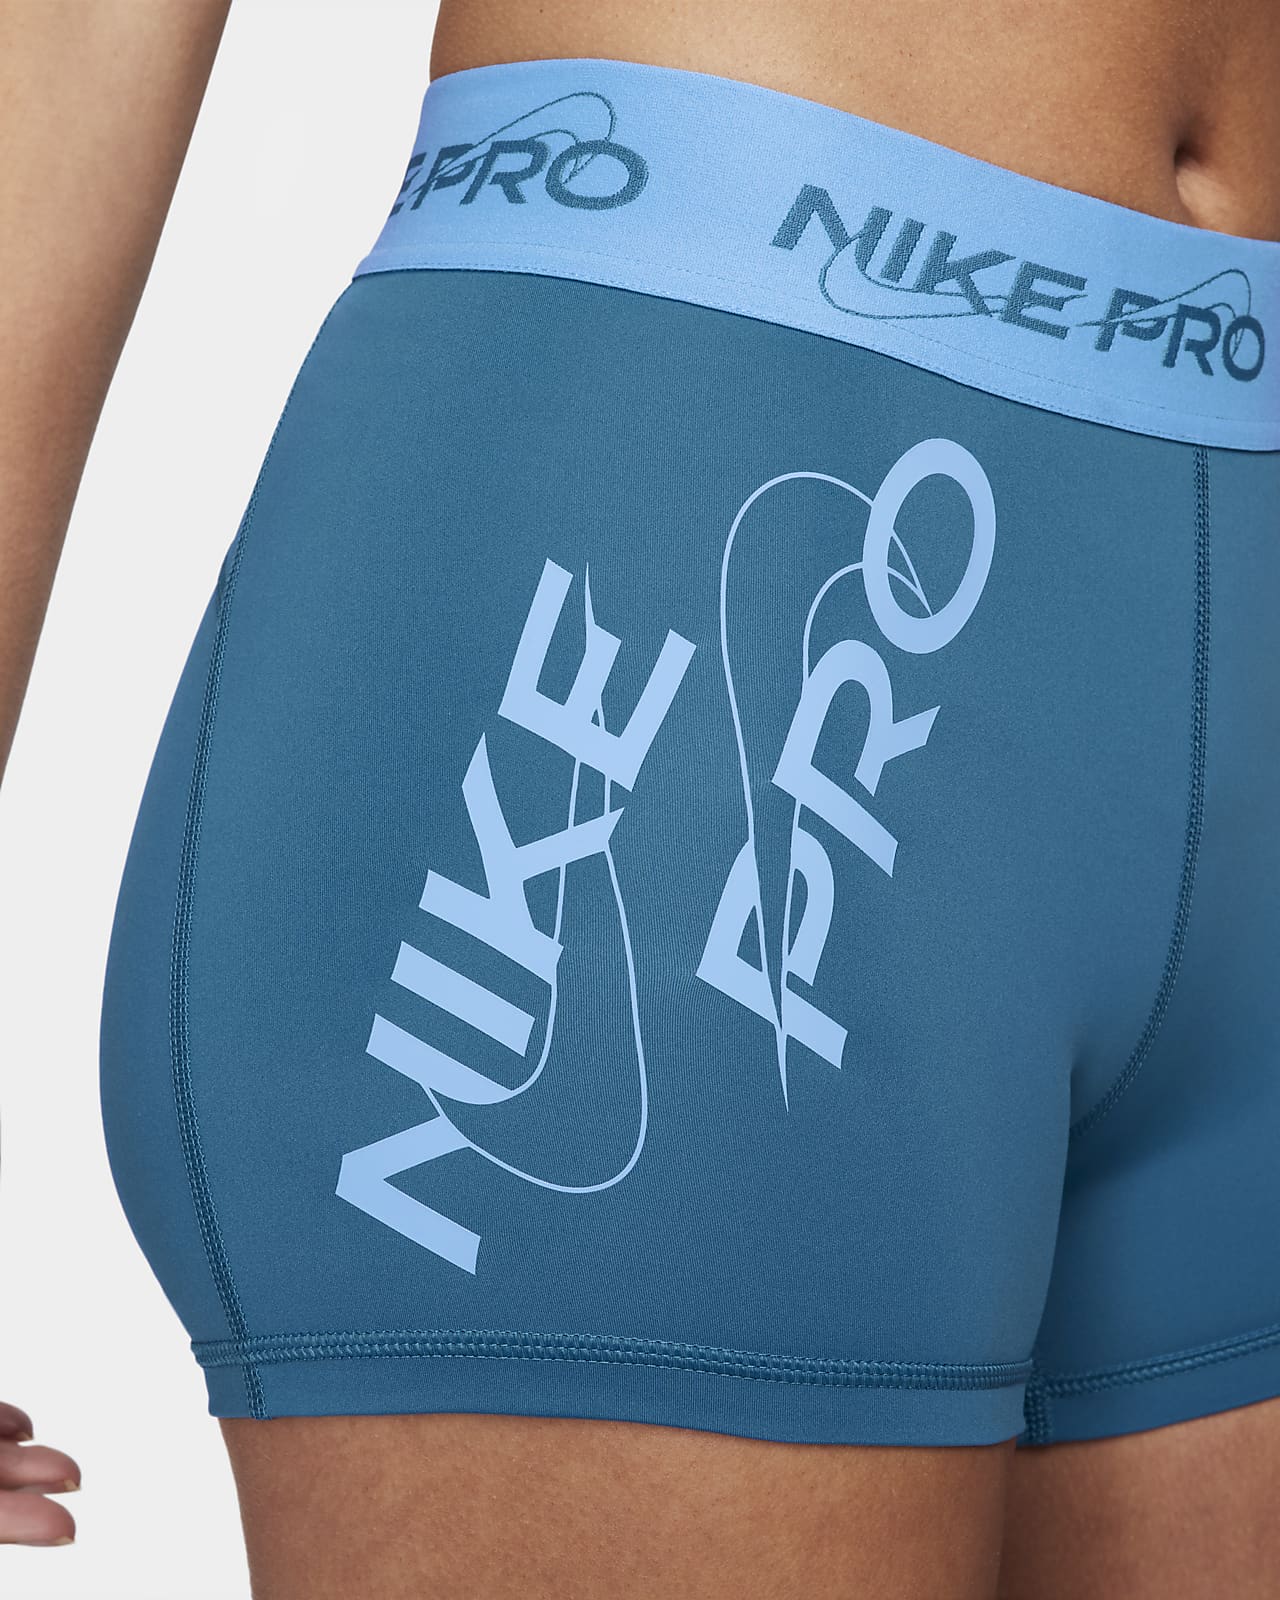 Nike, Pro Three Inch Shorts Womens, Performance Shorts